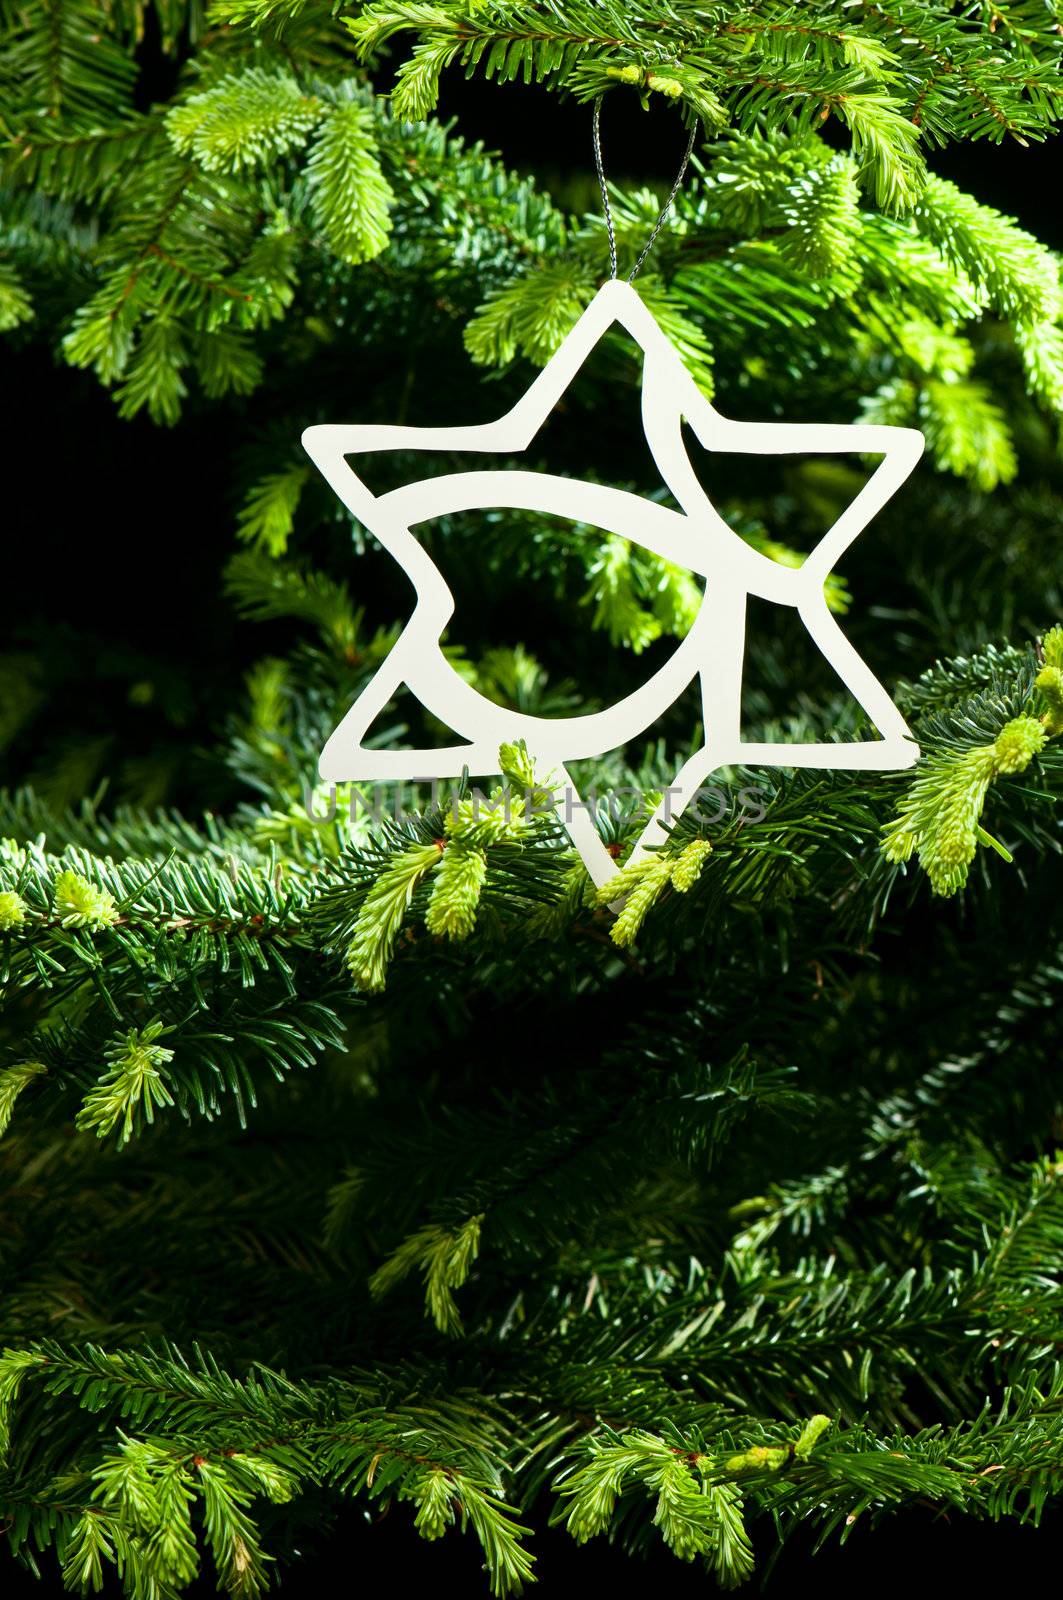 Star shape Christmas ornament in fresh green Christmas tree